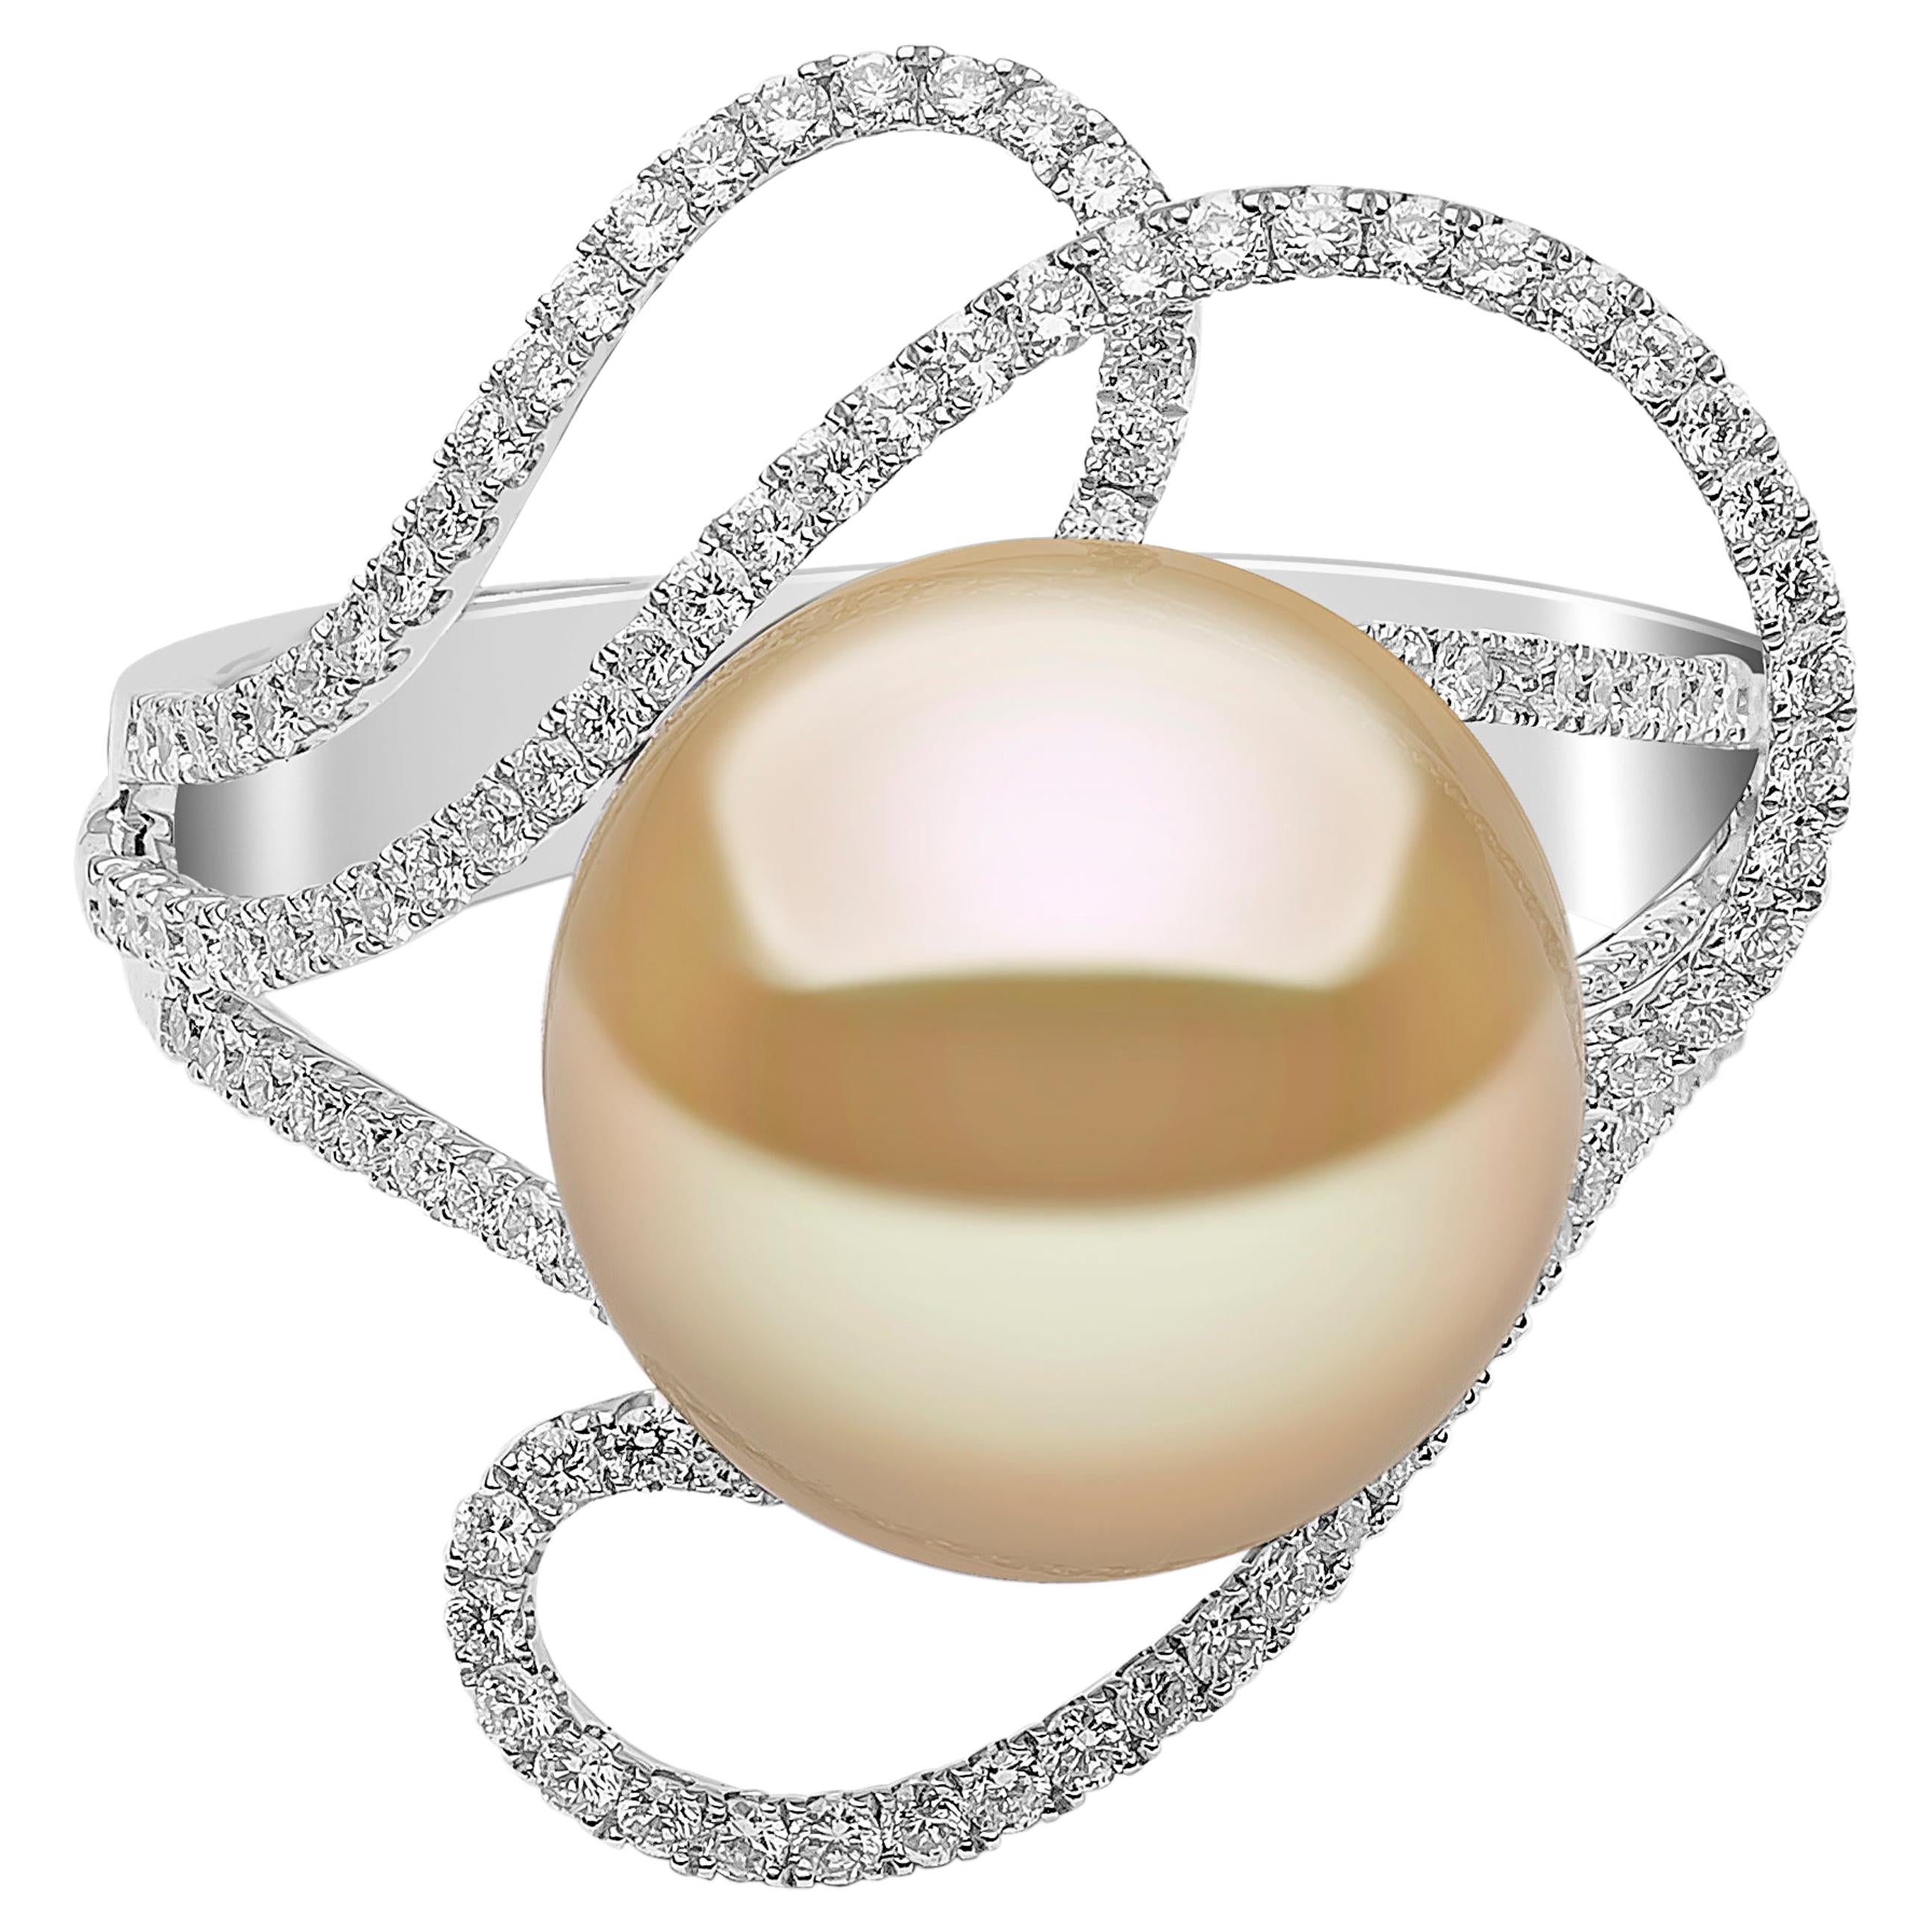 Yoko London Golden South Sea Pearl and Diamond Ring in 18 Karat White Gold